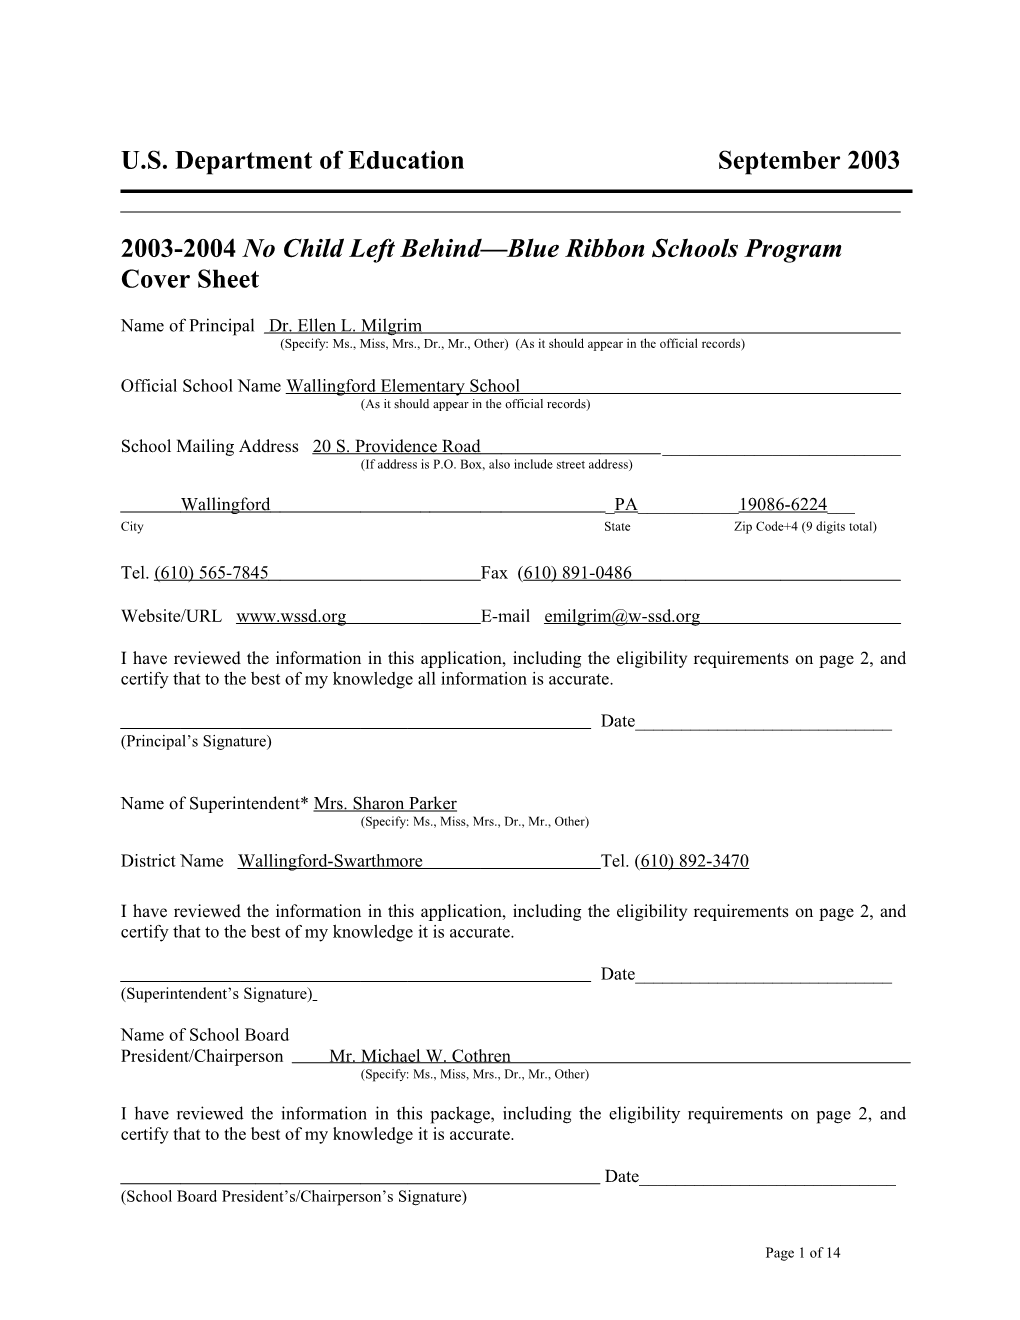 Wallingford Elementary School 2004 No Child Left Behind-Blue Ribbon School Application (Msword)